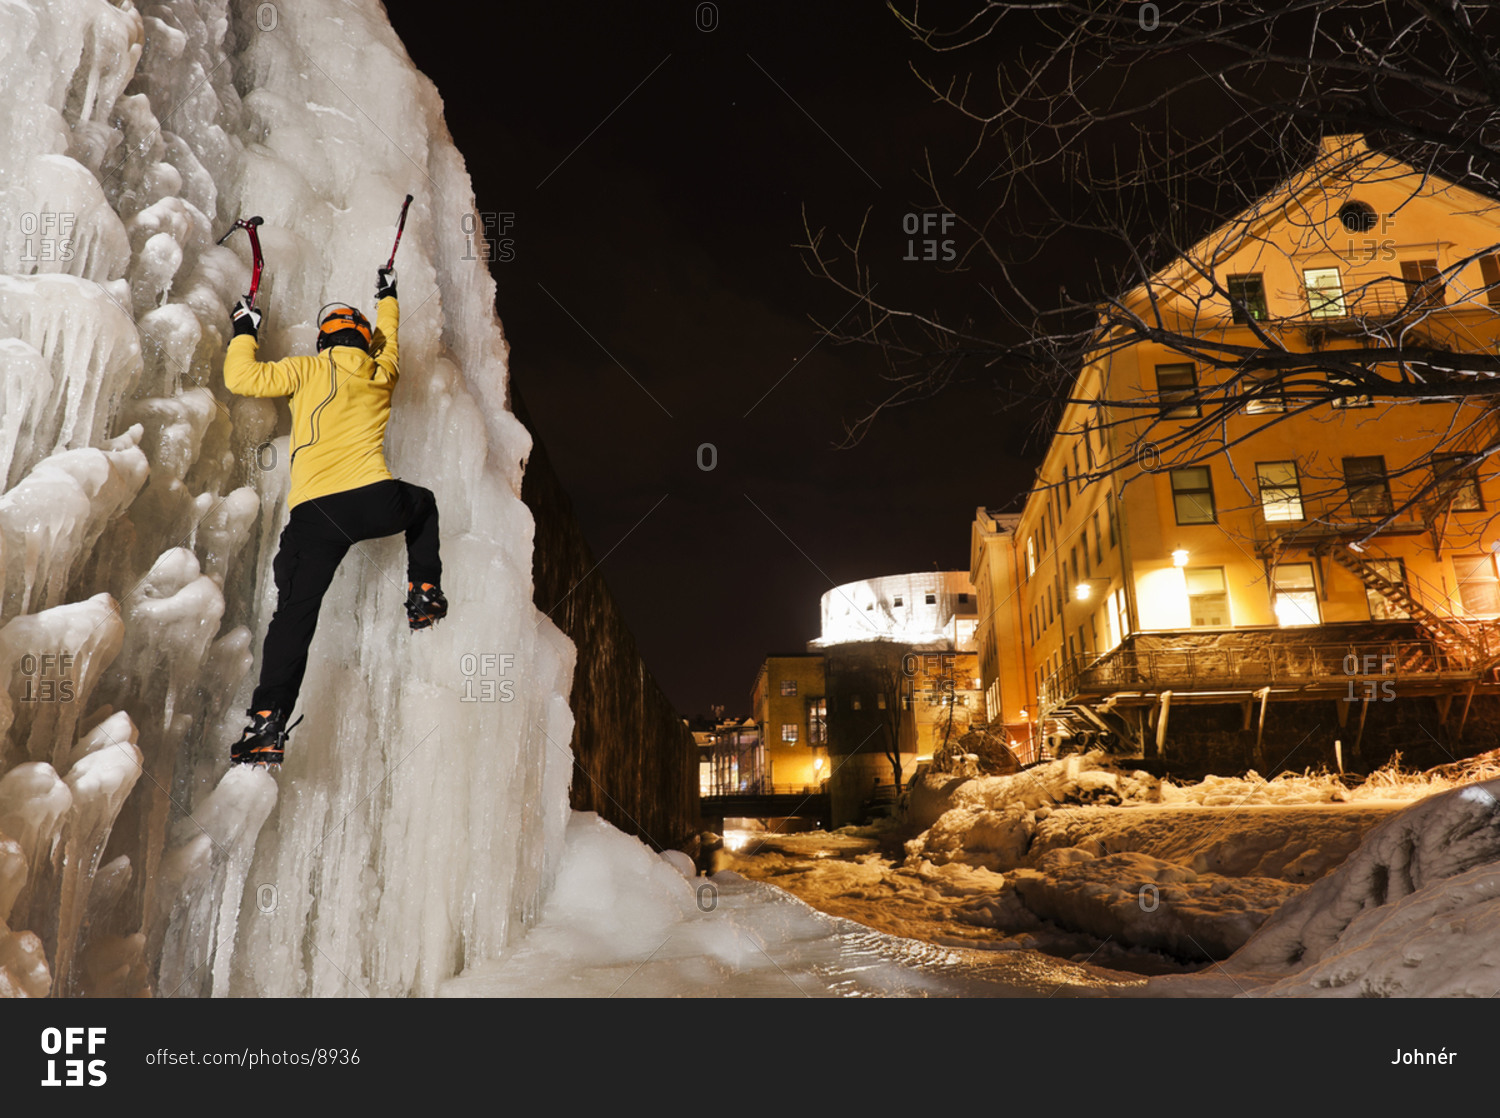 Man ice climbing up frozen waterfall in urban area adventure